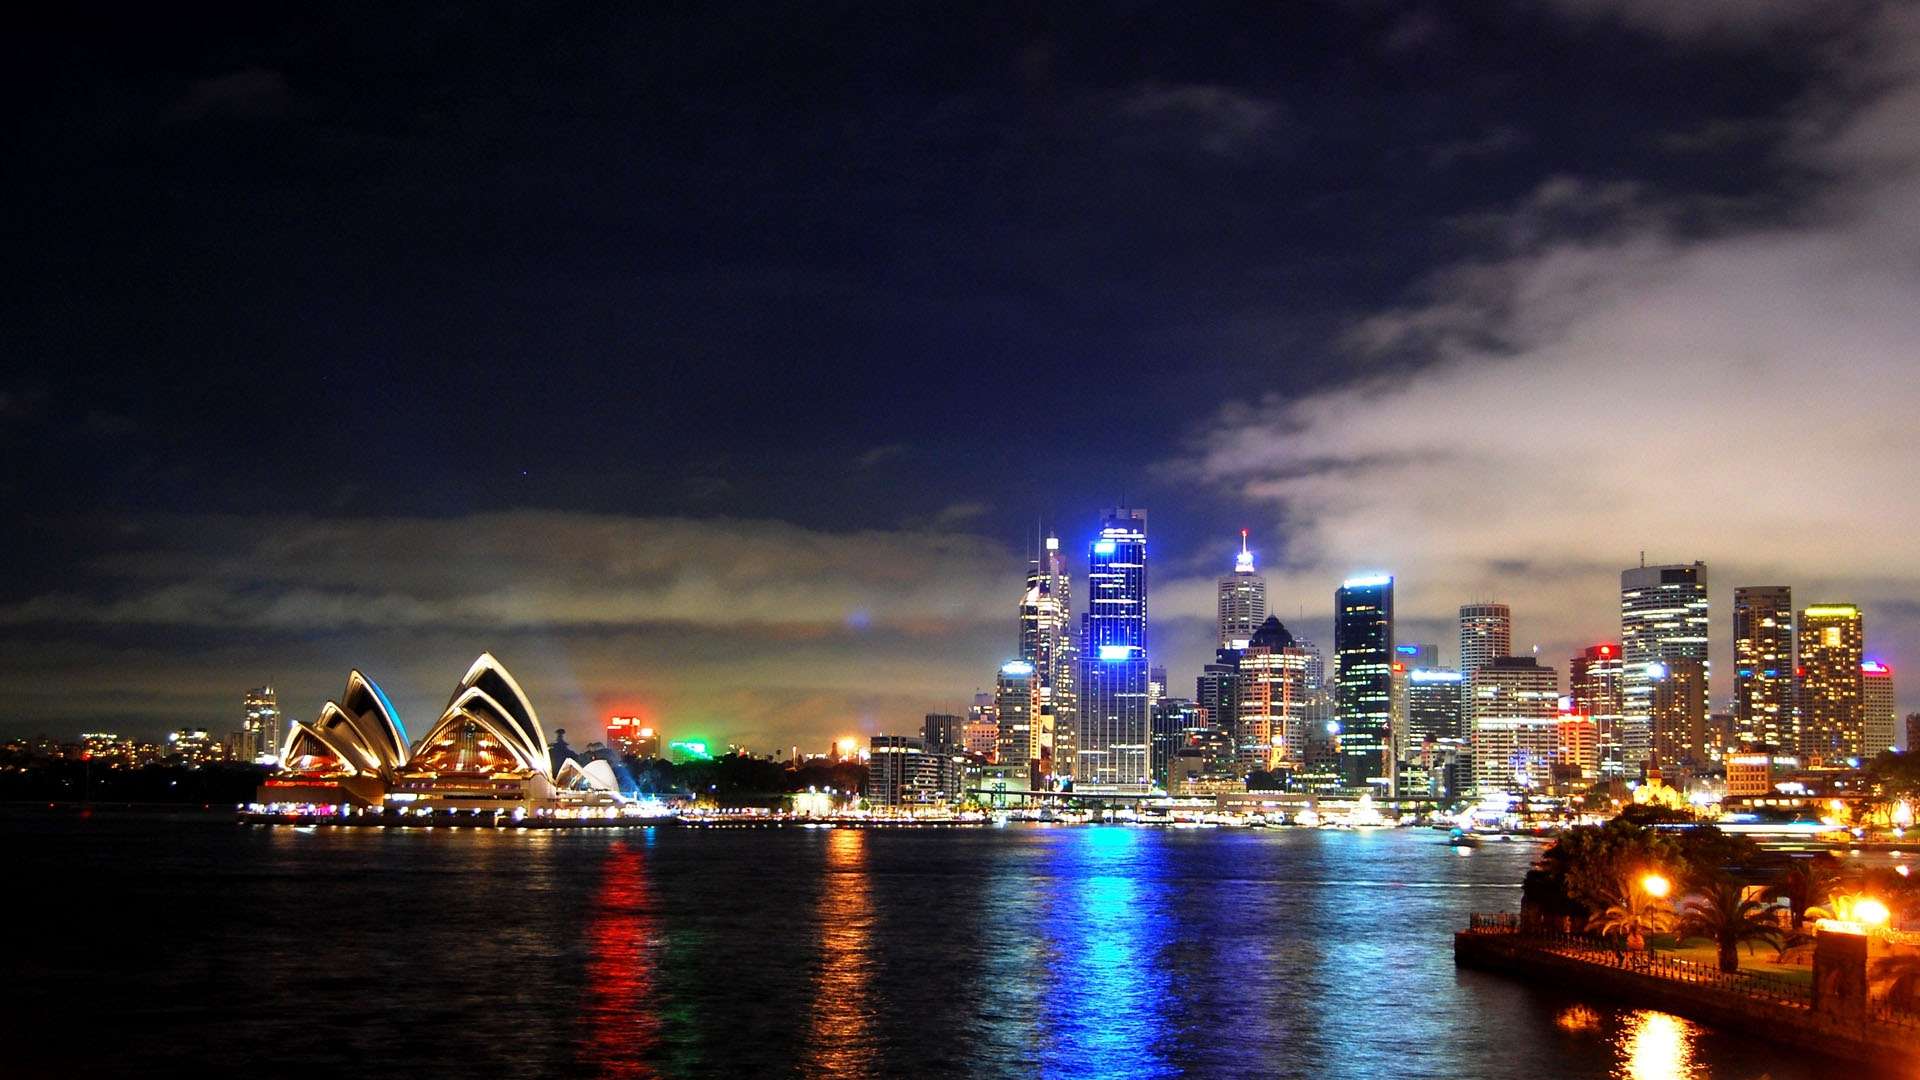 Great Night View Of Sydney CBD And Opera House